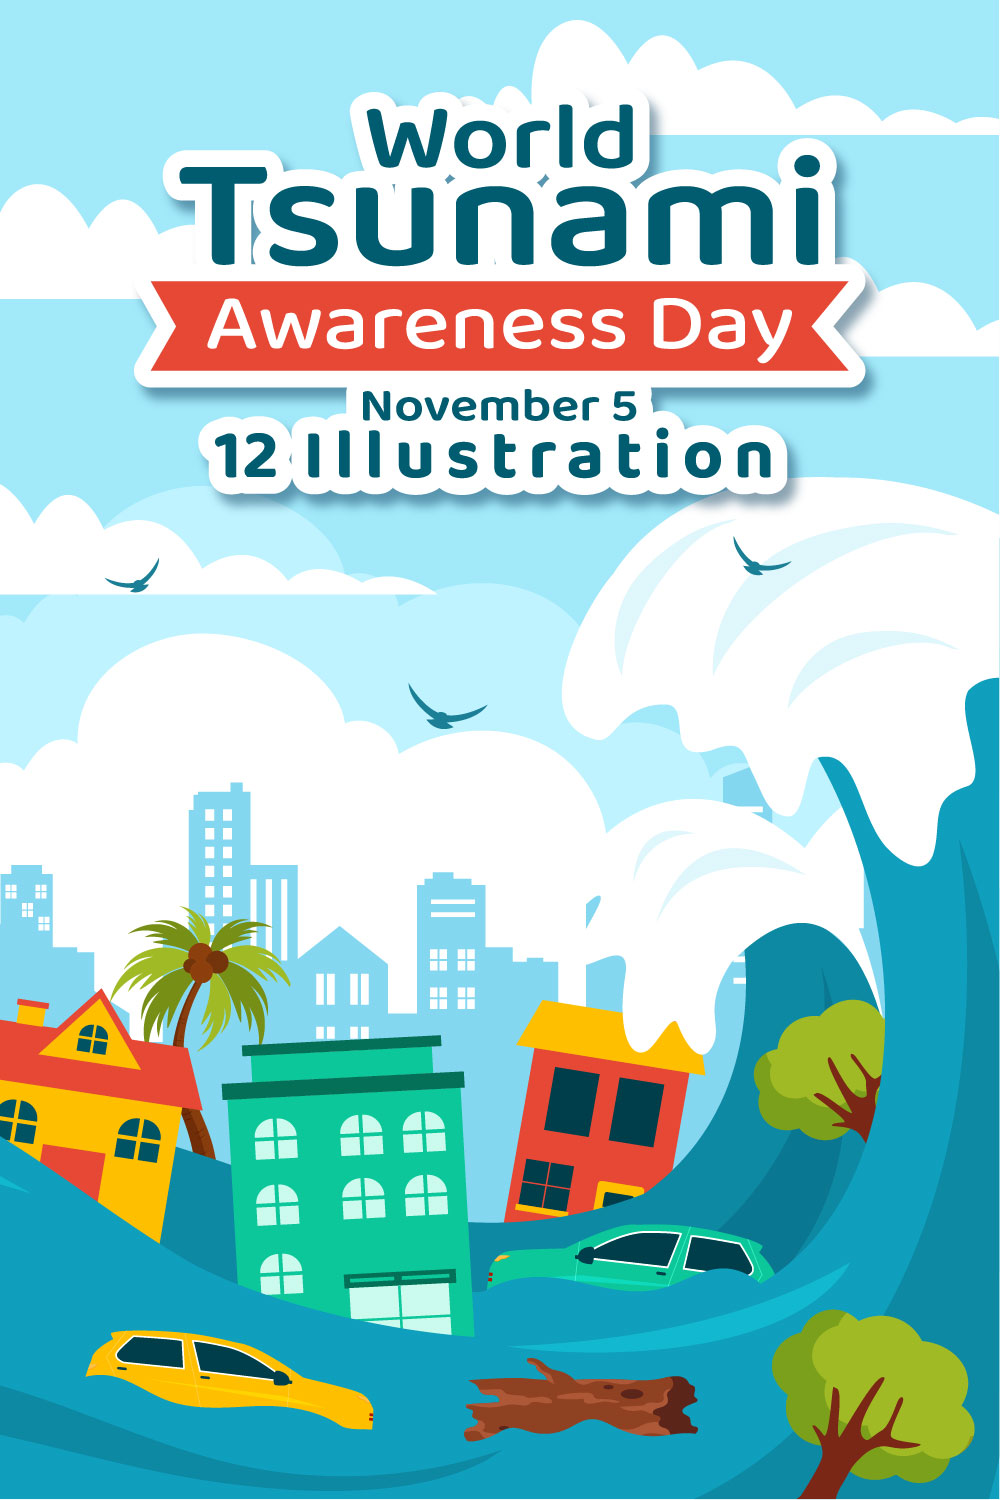 12 World Tsunami Awareness Day Illustration pinterest preview image.